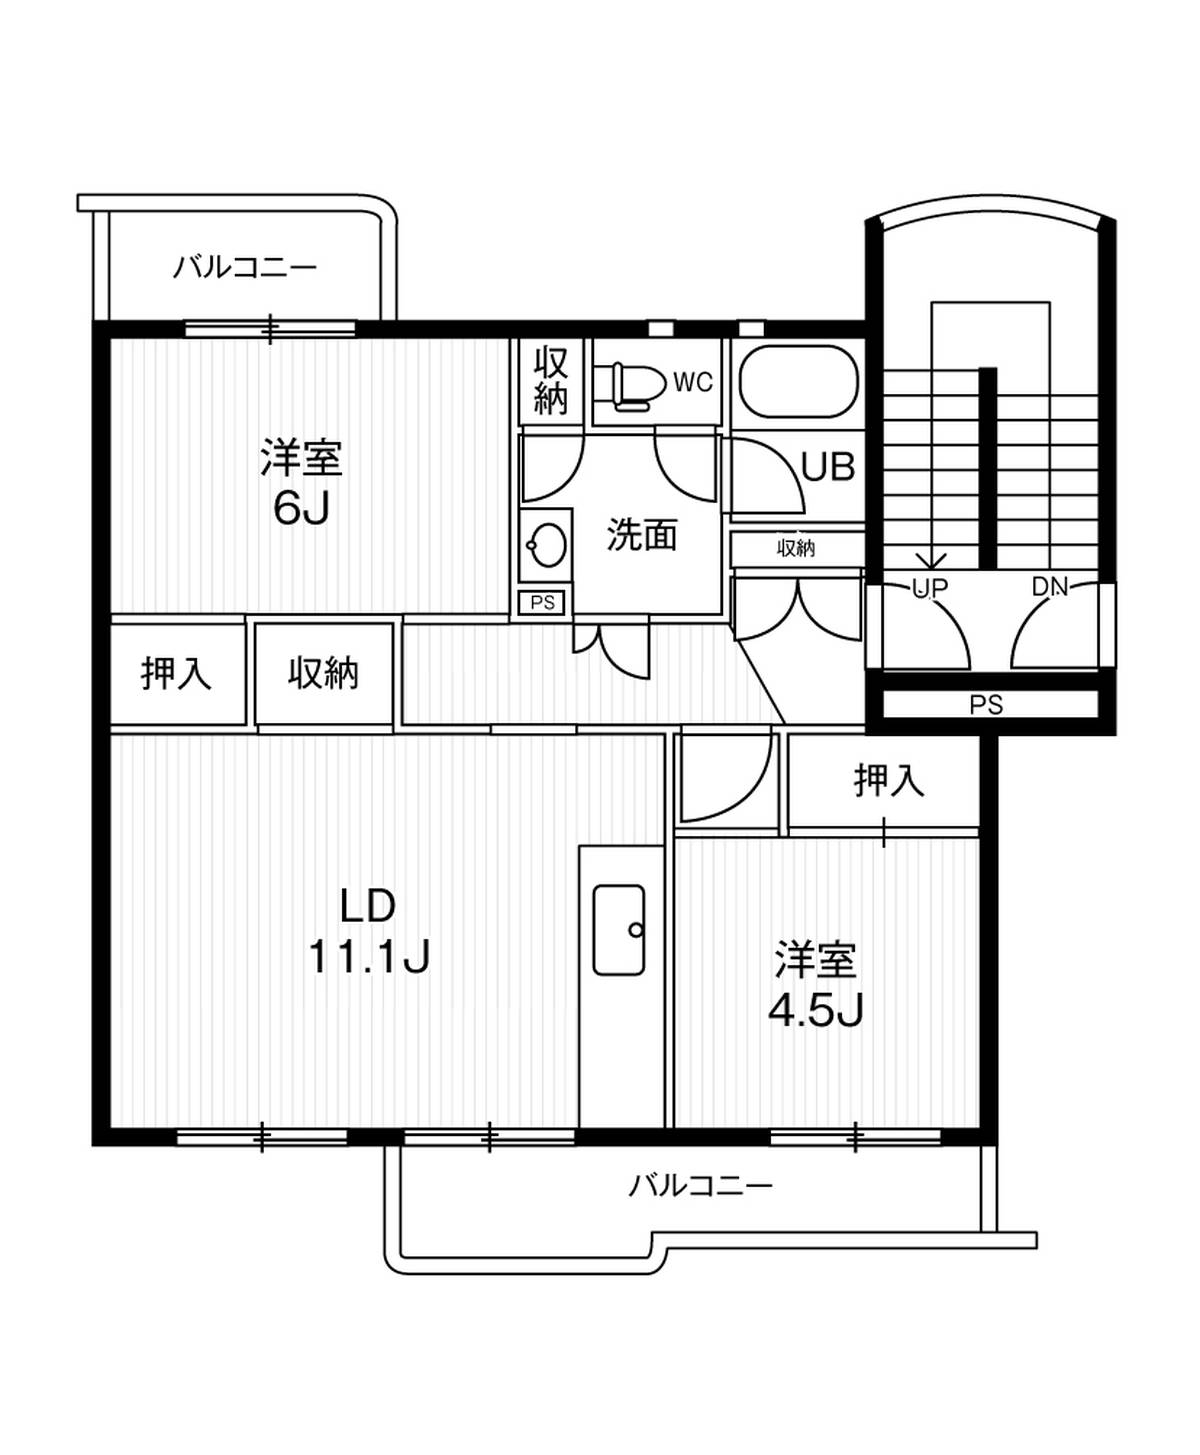 2LDK floorplan of Village House Inokuchi in Inazawa-shi